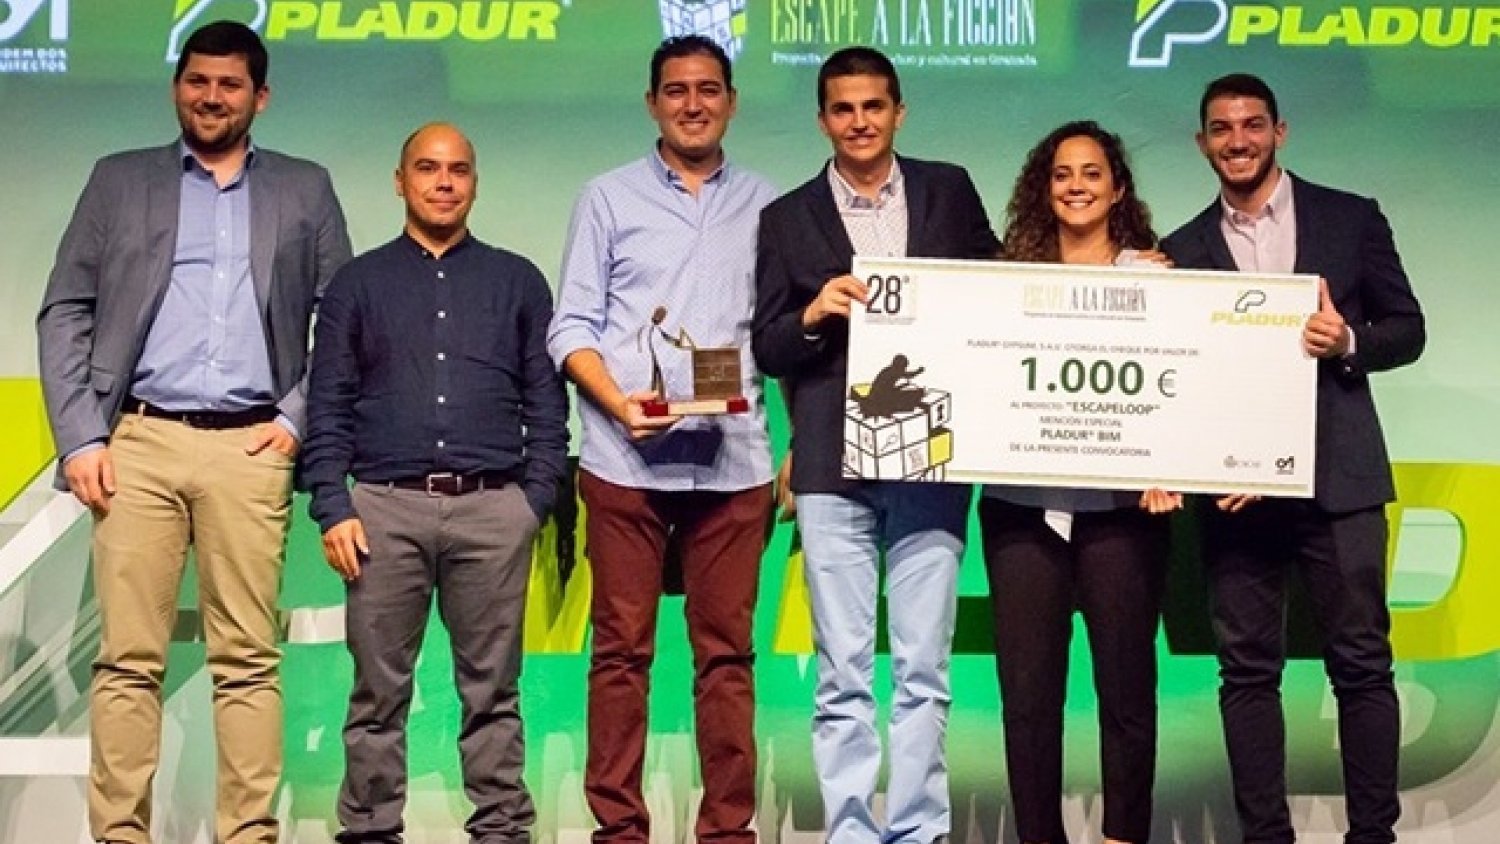 Estudiantes de arquitectura de la UMA ganan el premio 'Pladur BIM'